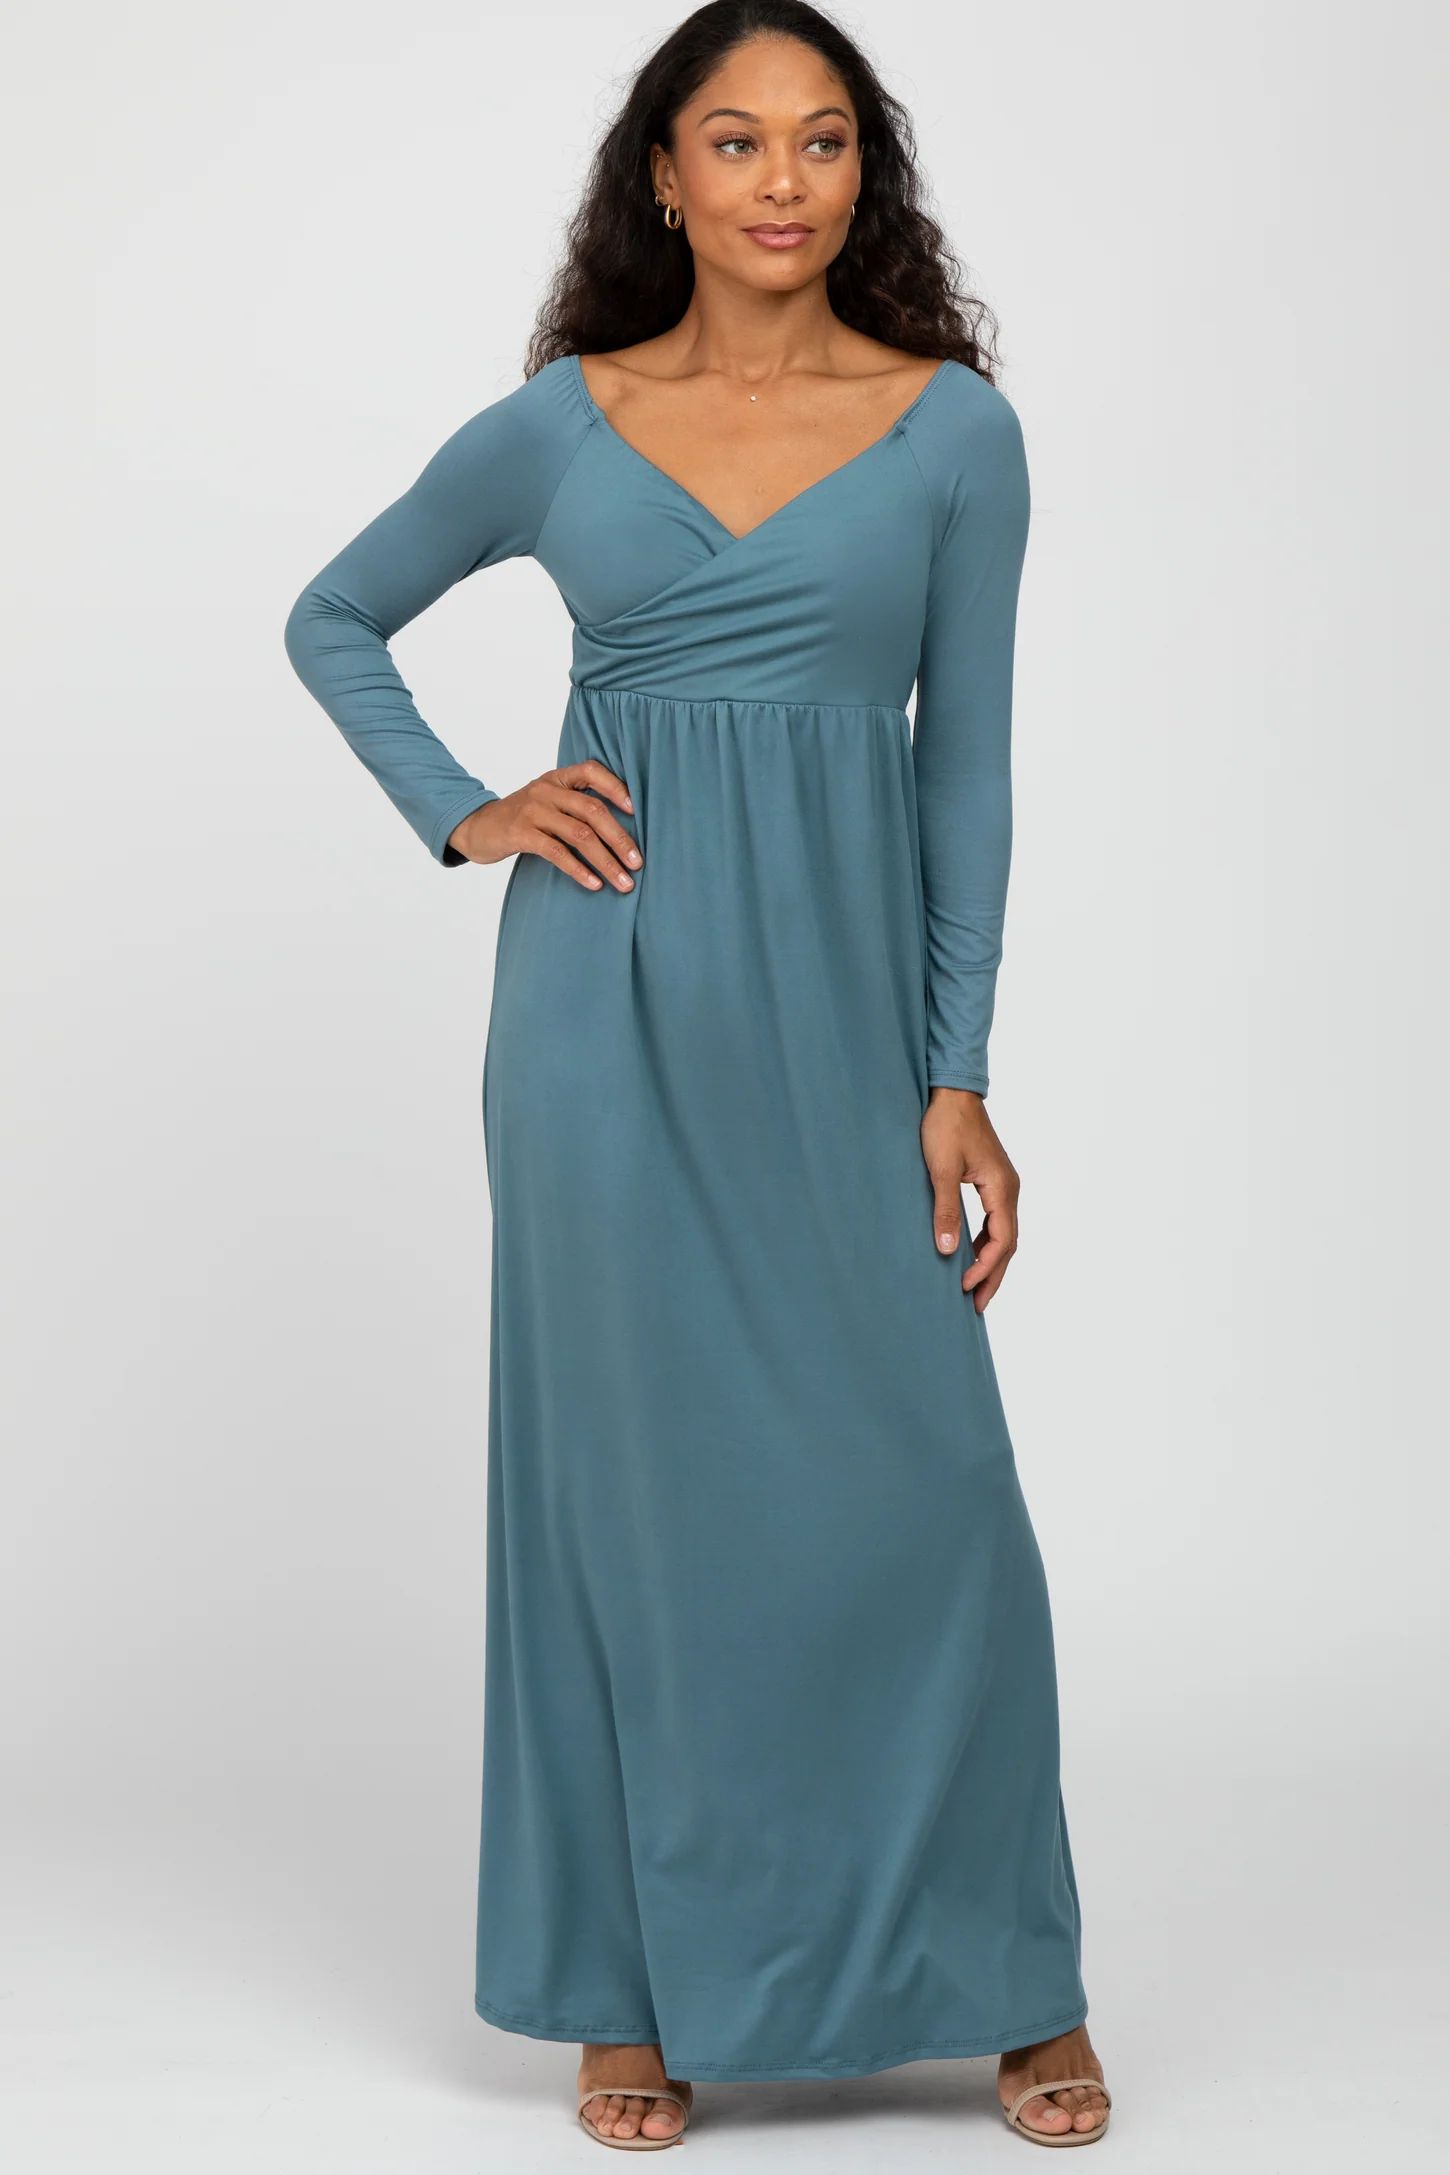 Turquoise Wrap Front Empire Waist Maxi Dress | PinkBlush Maternity